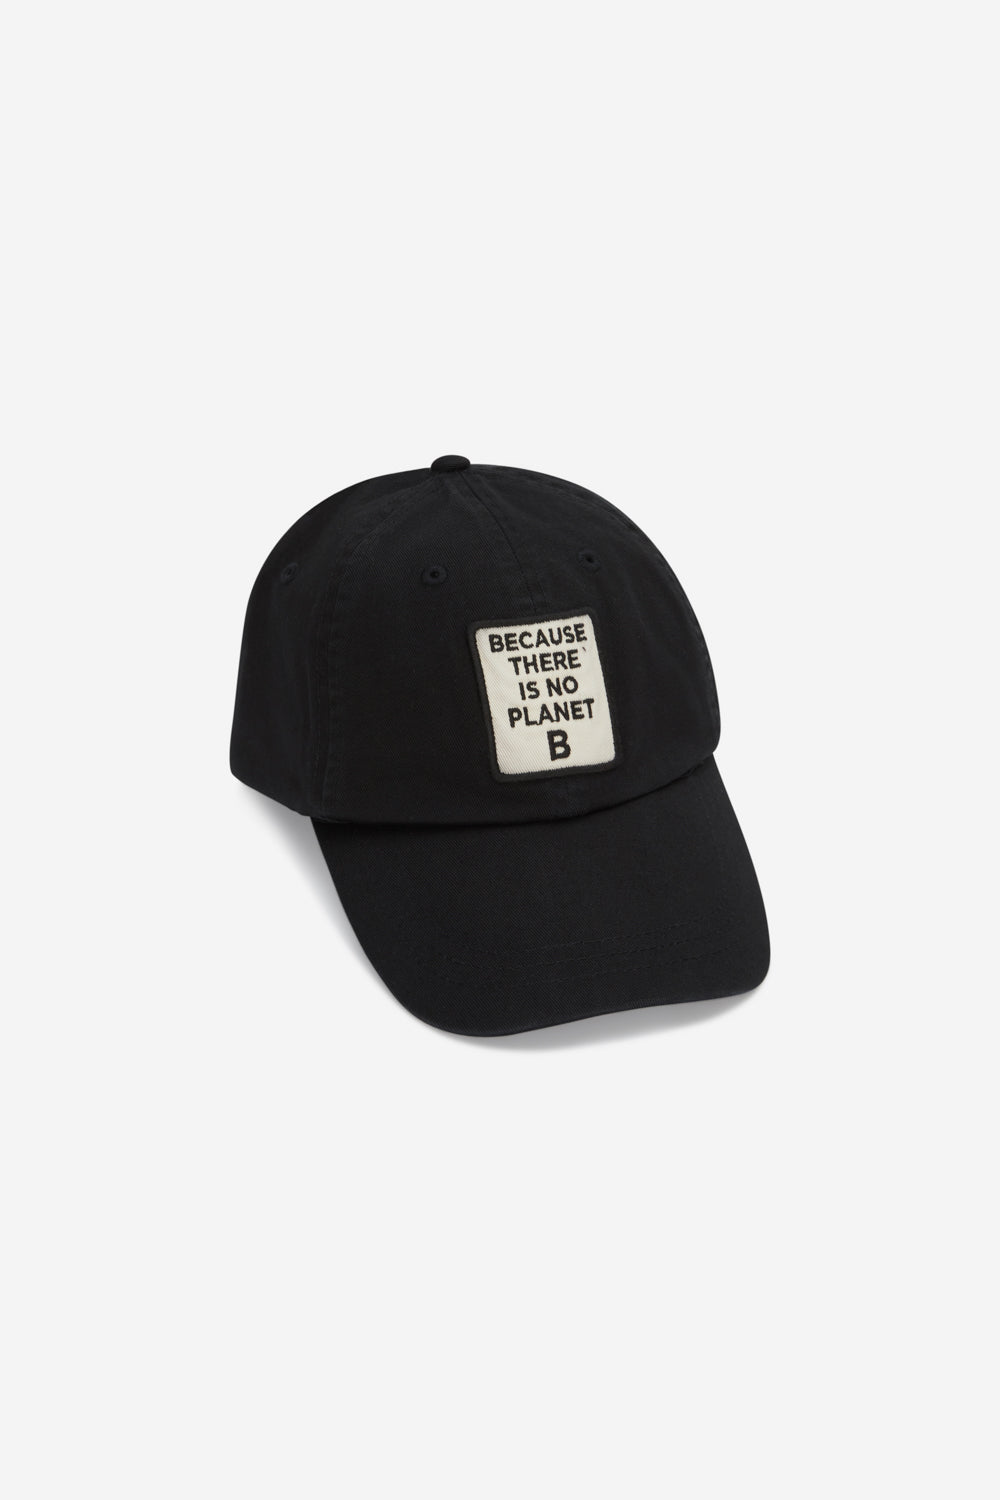 BLACK PATCH BECAUSE CAP 